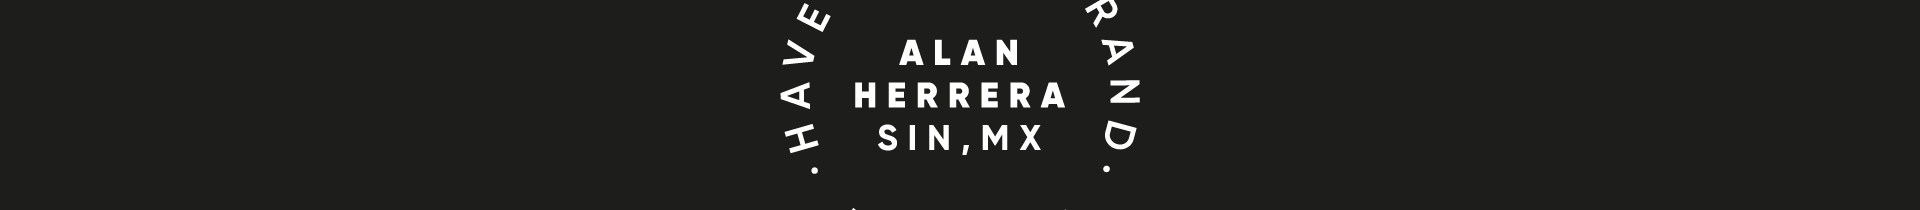 Alan Herrera's profile banner